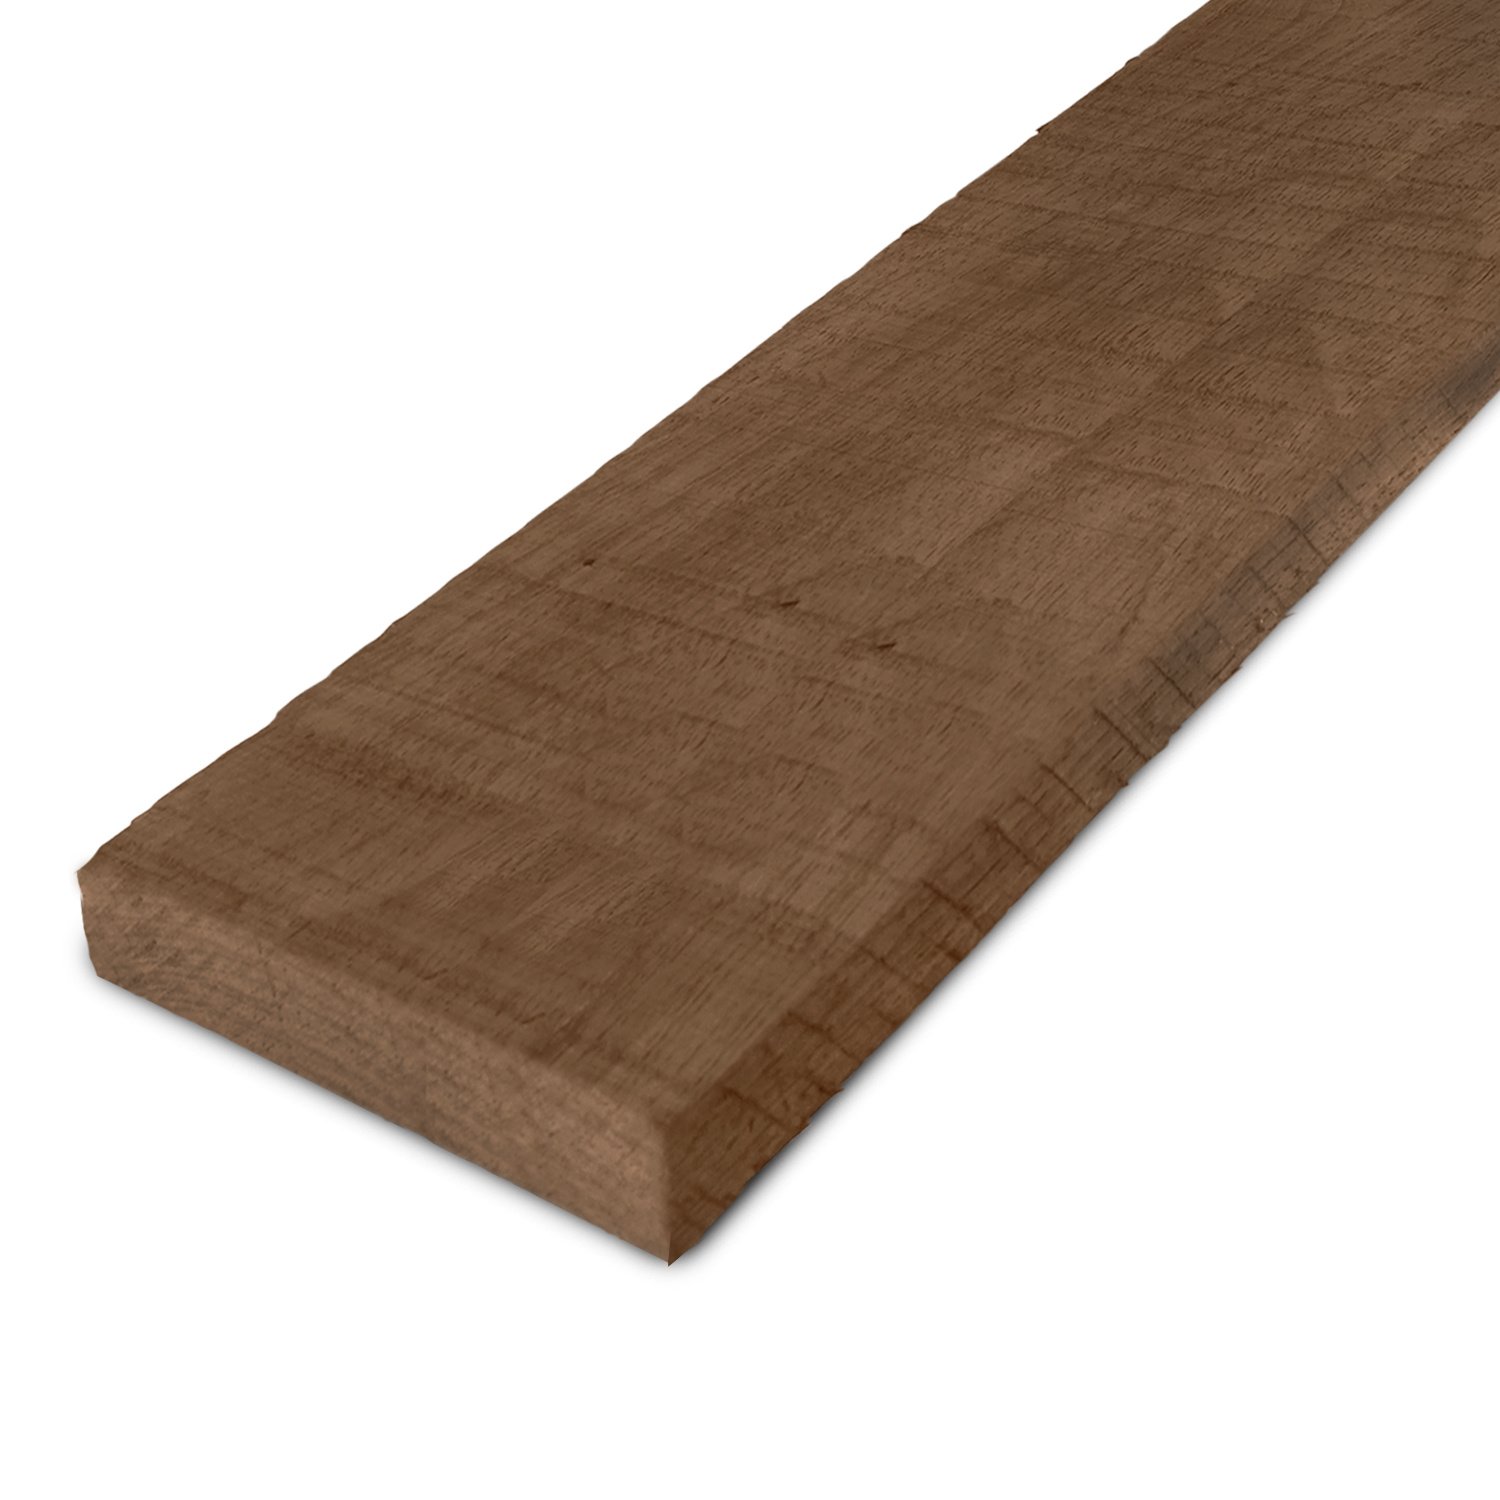  Thermowood fraké plank 32x155mm -  fijnbezaagd (ruw) - kunstmatig gedroogd (kd 8-12%) - thermisch gemodificeerd fraké hout (thermohout)